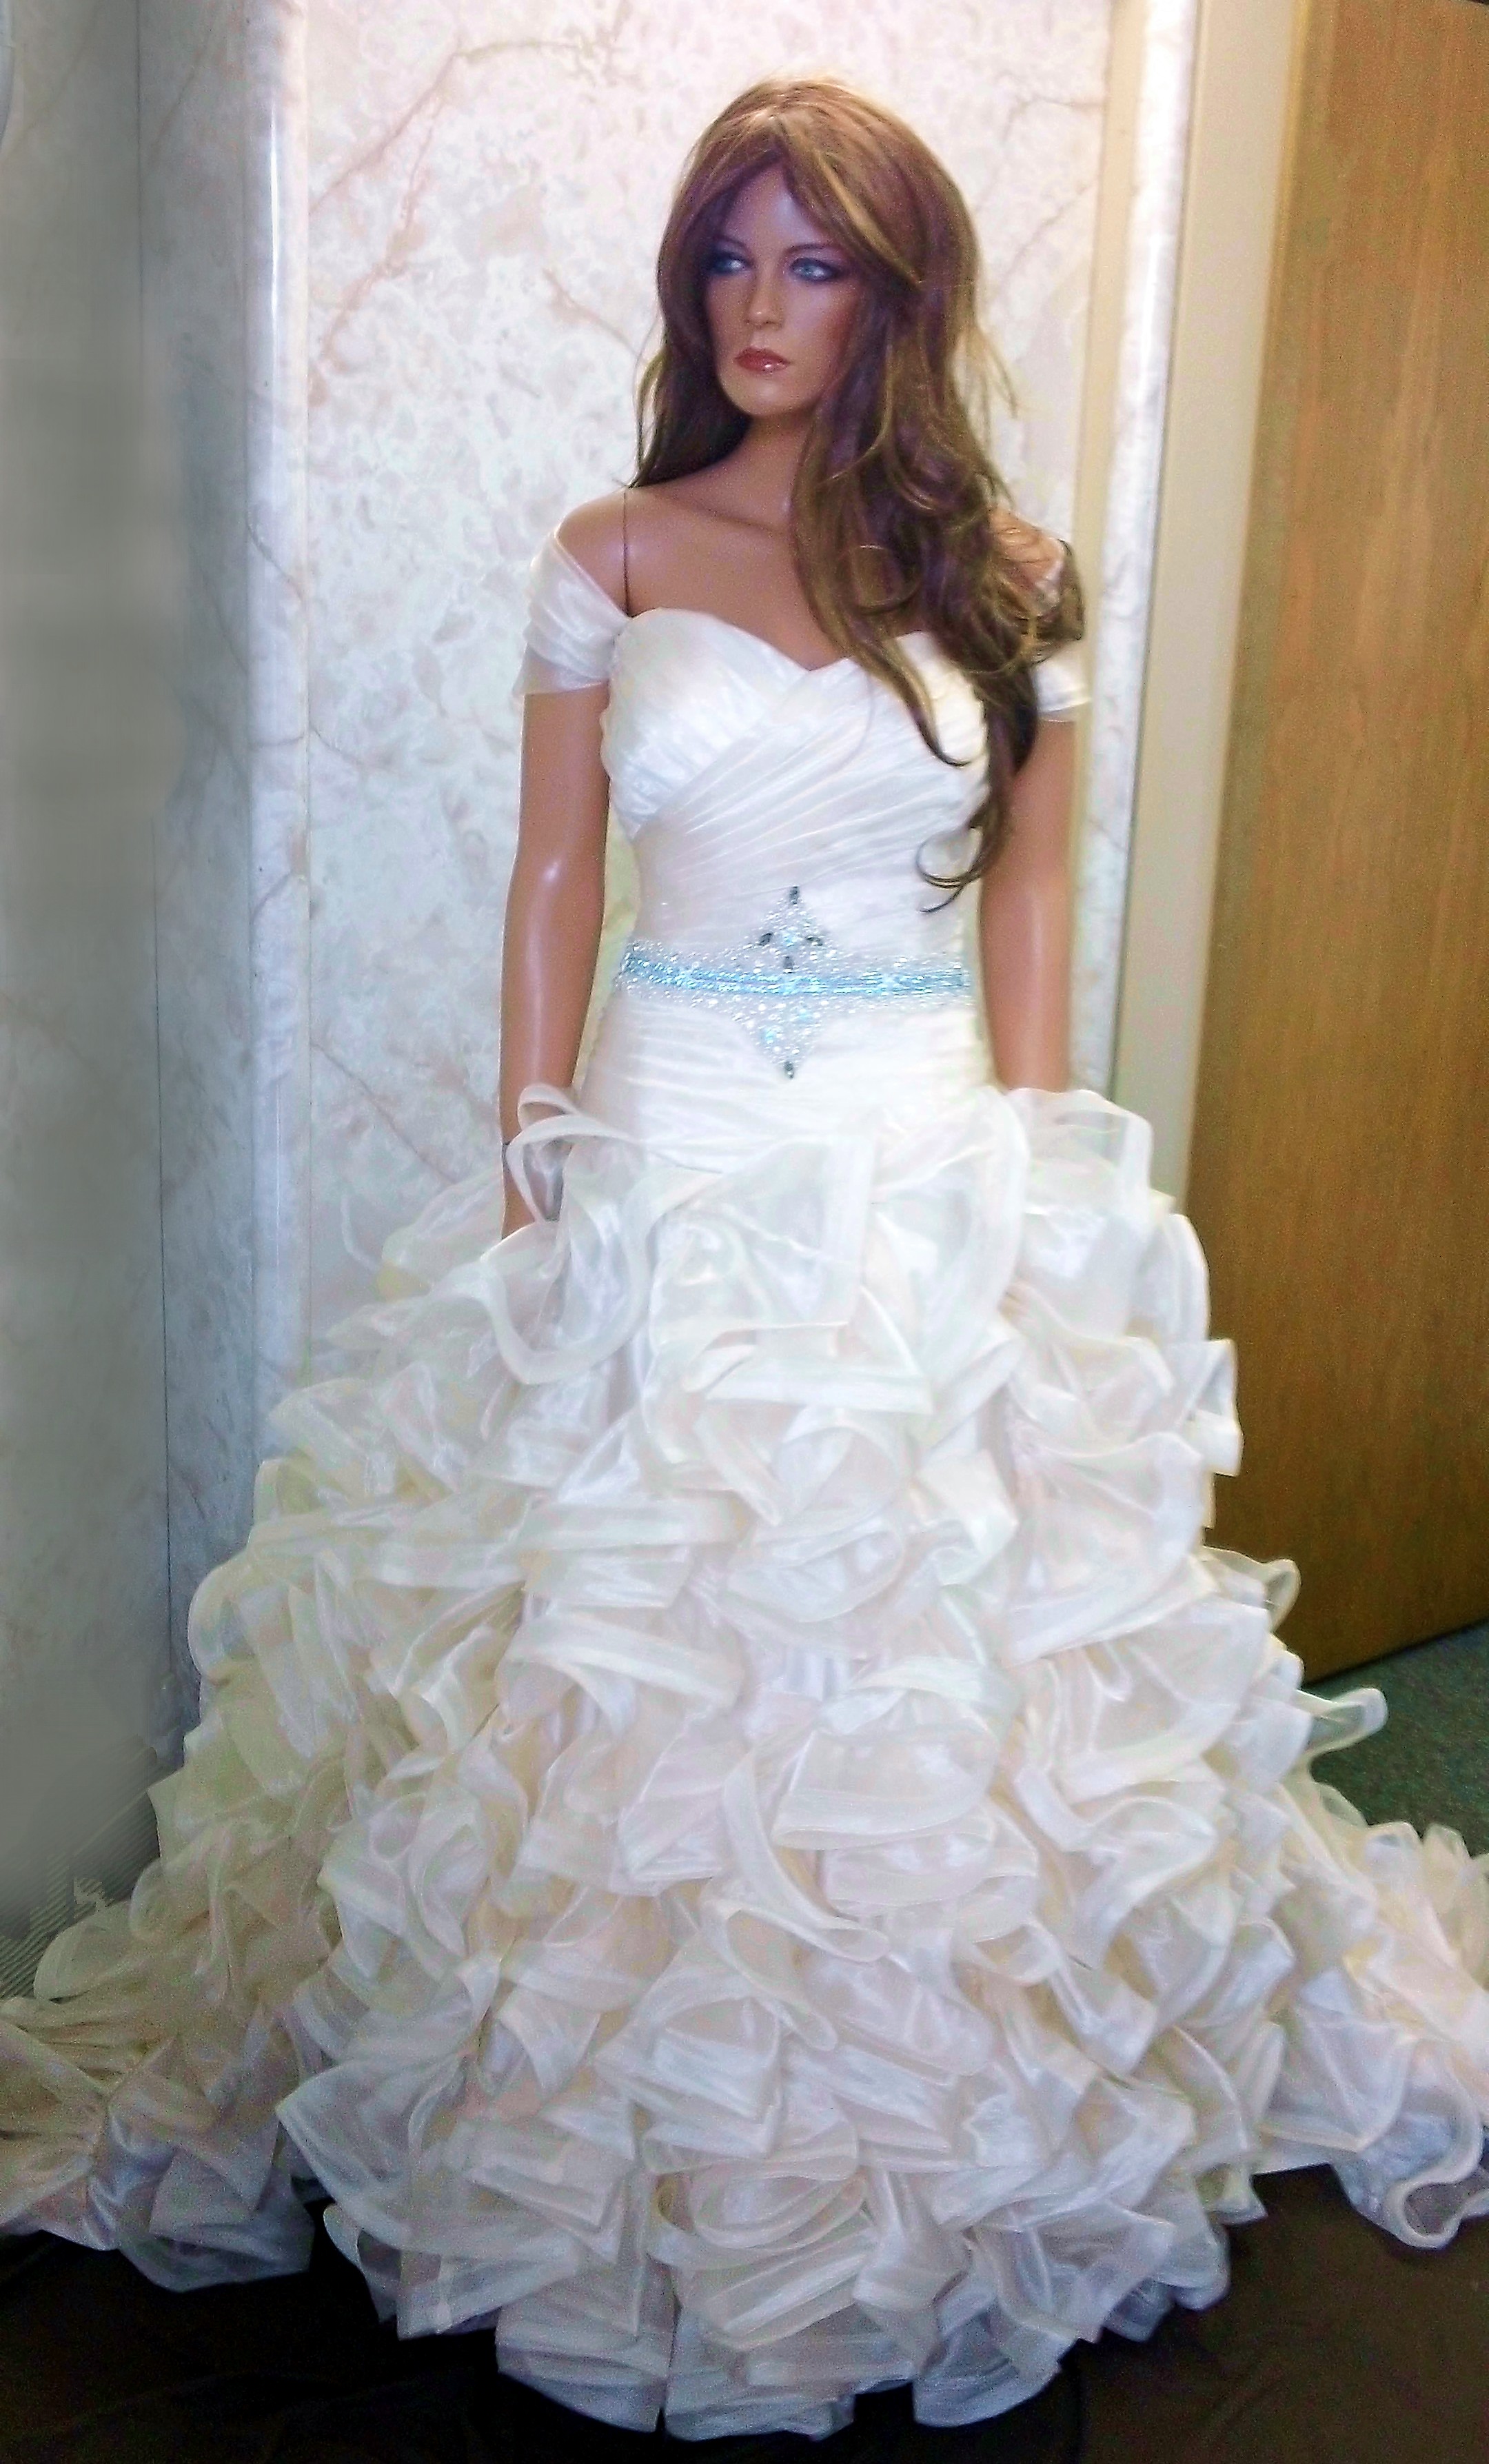 katniss style wedding gown